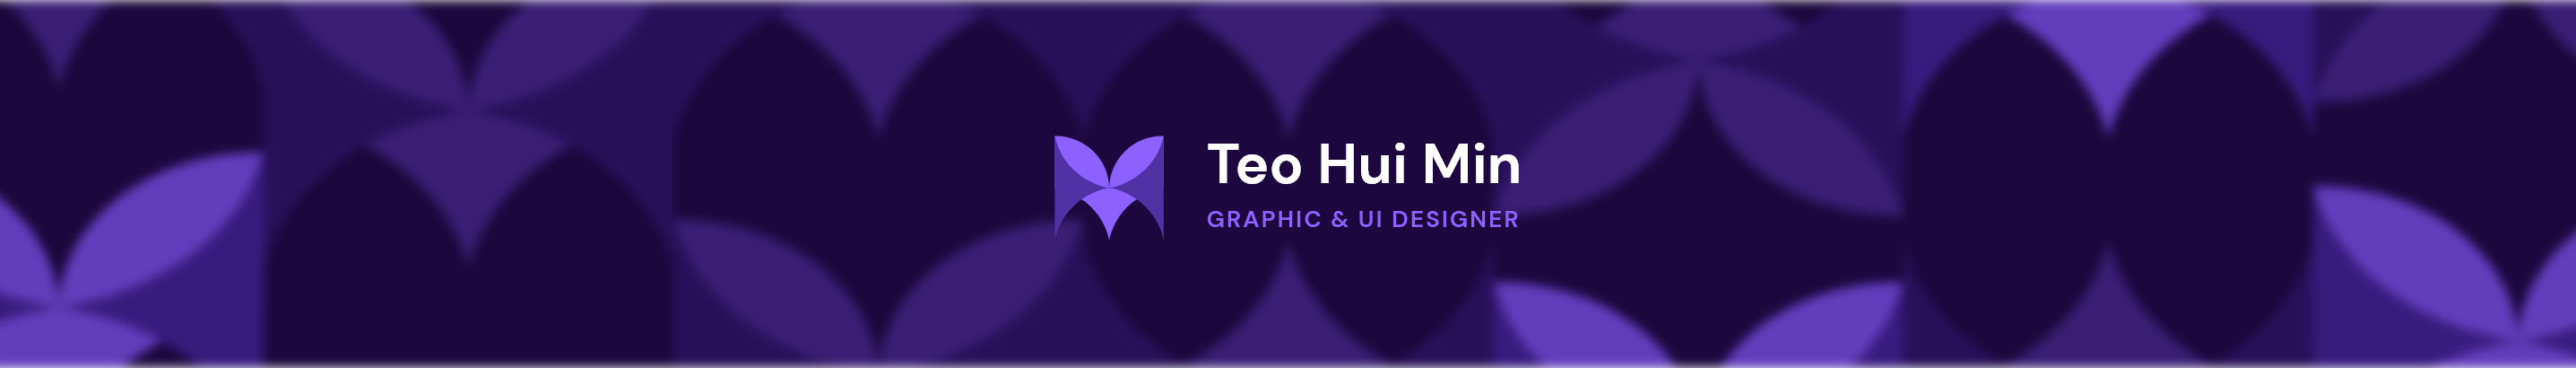 Teo Hui Min's profile banner